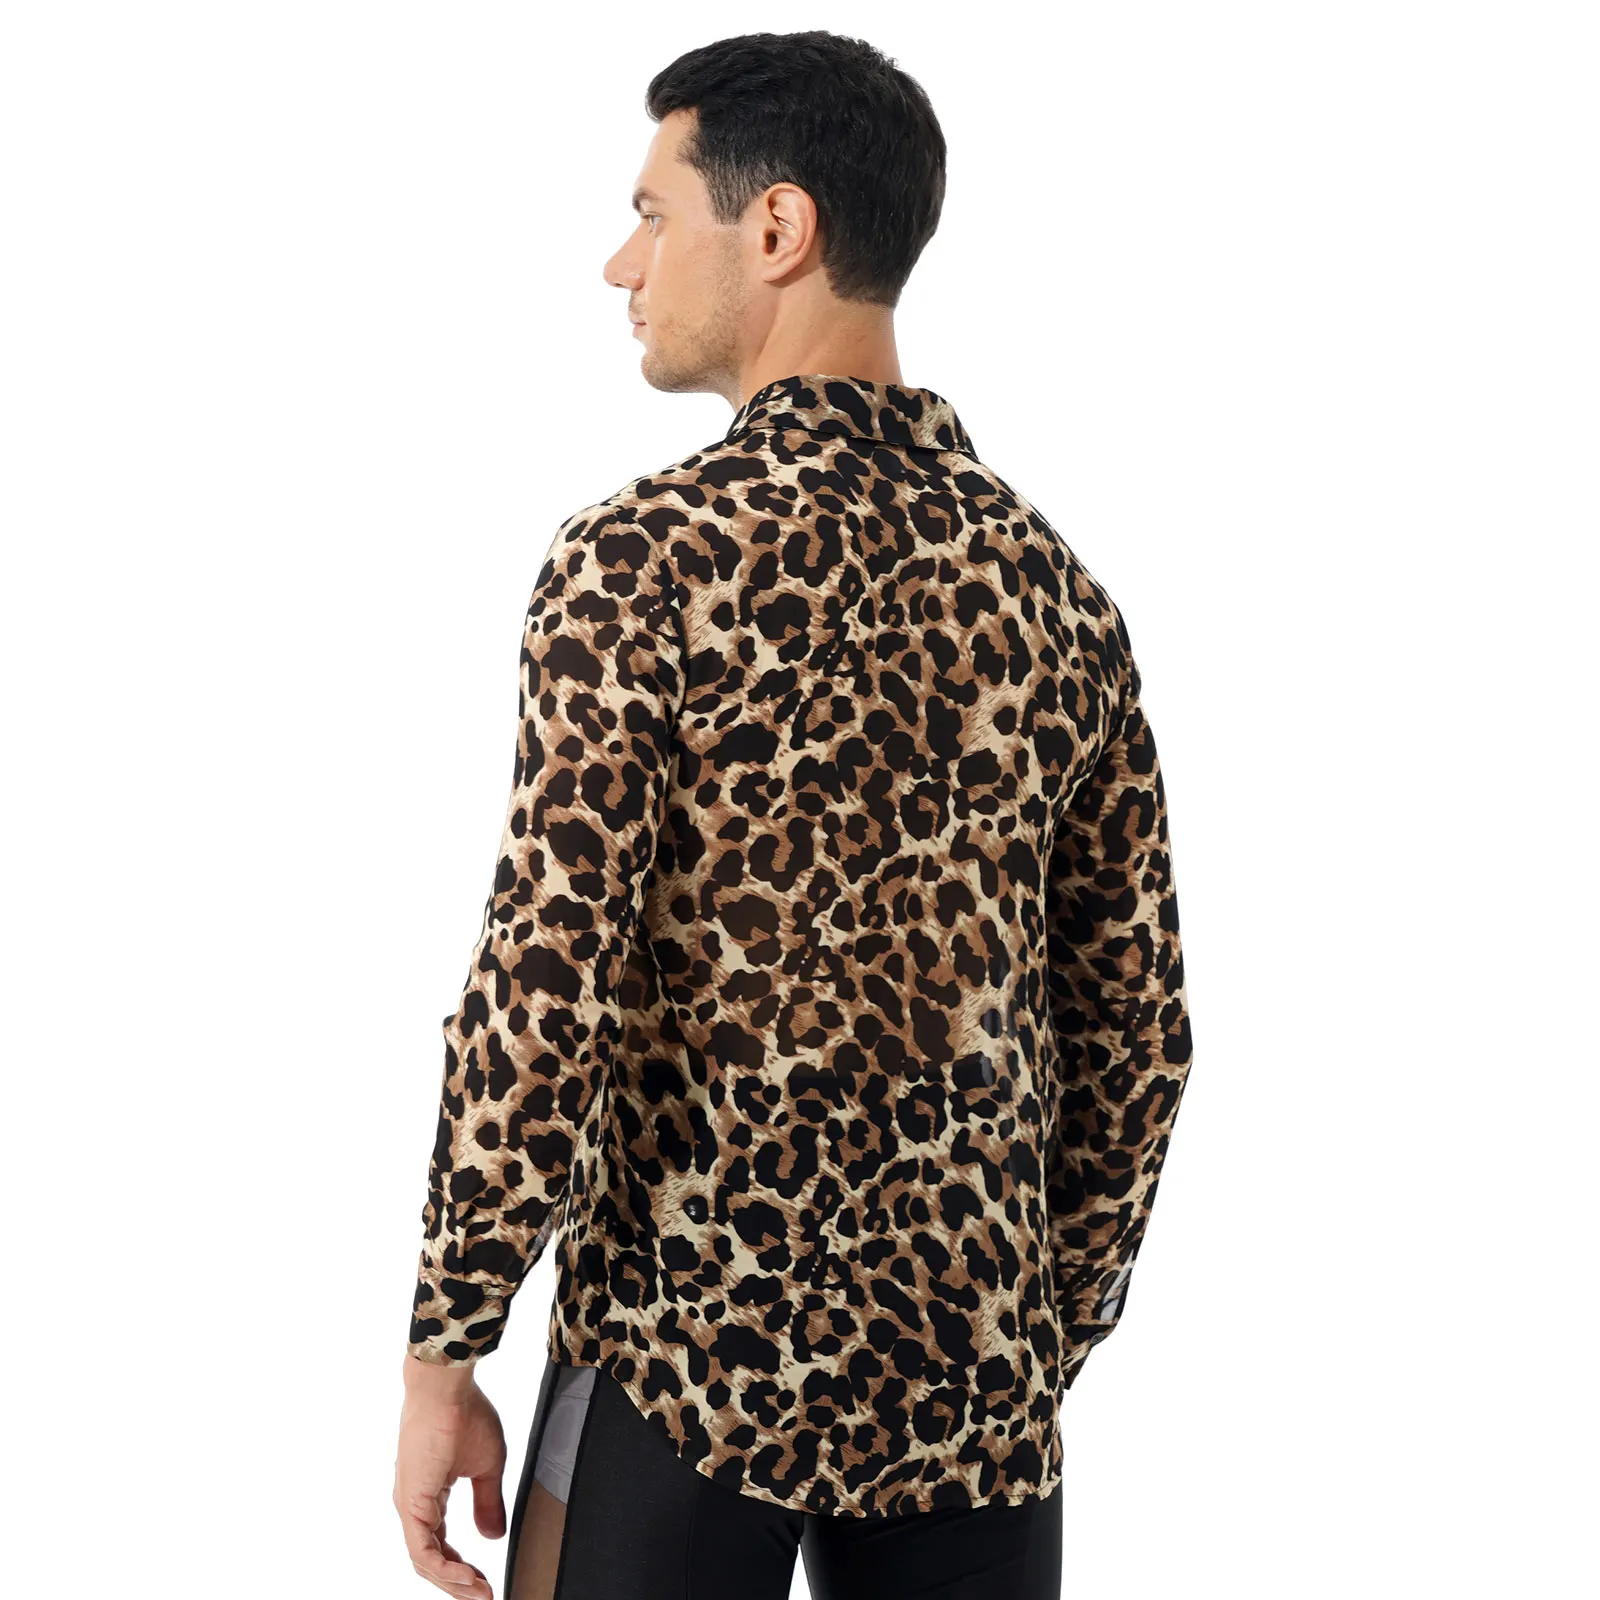 Beautyfine Mens Leopard Print Shirt Short Sleeve Chest Pocket Casual Turn Down Collar T-Shirts Tops 